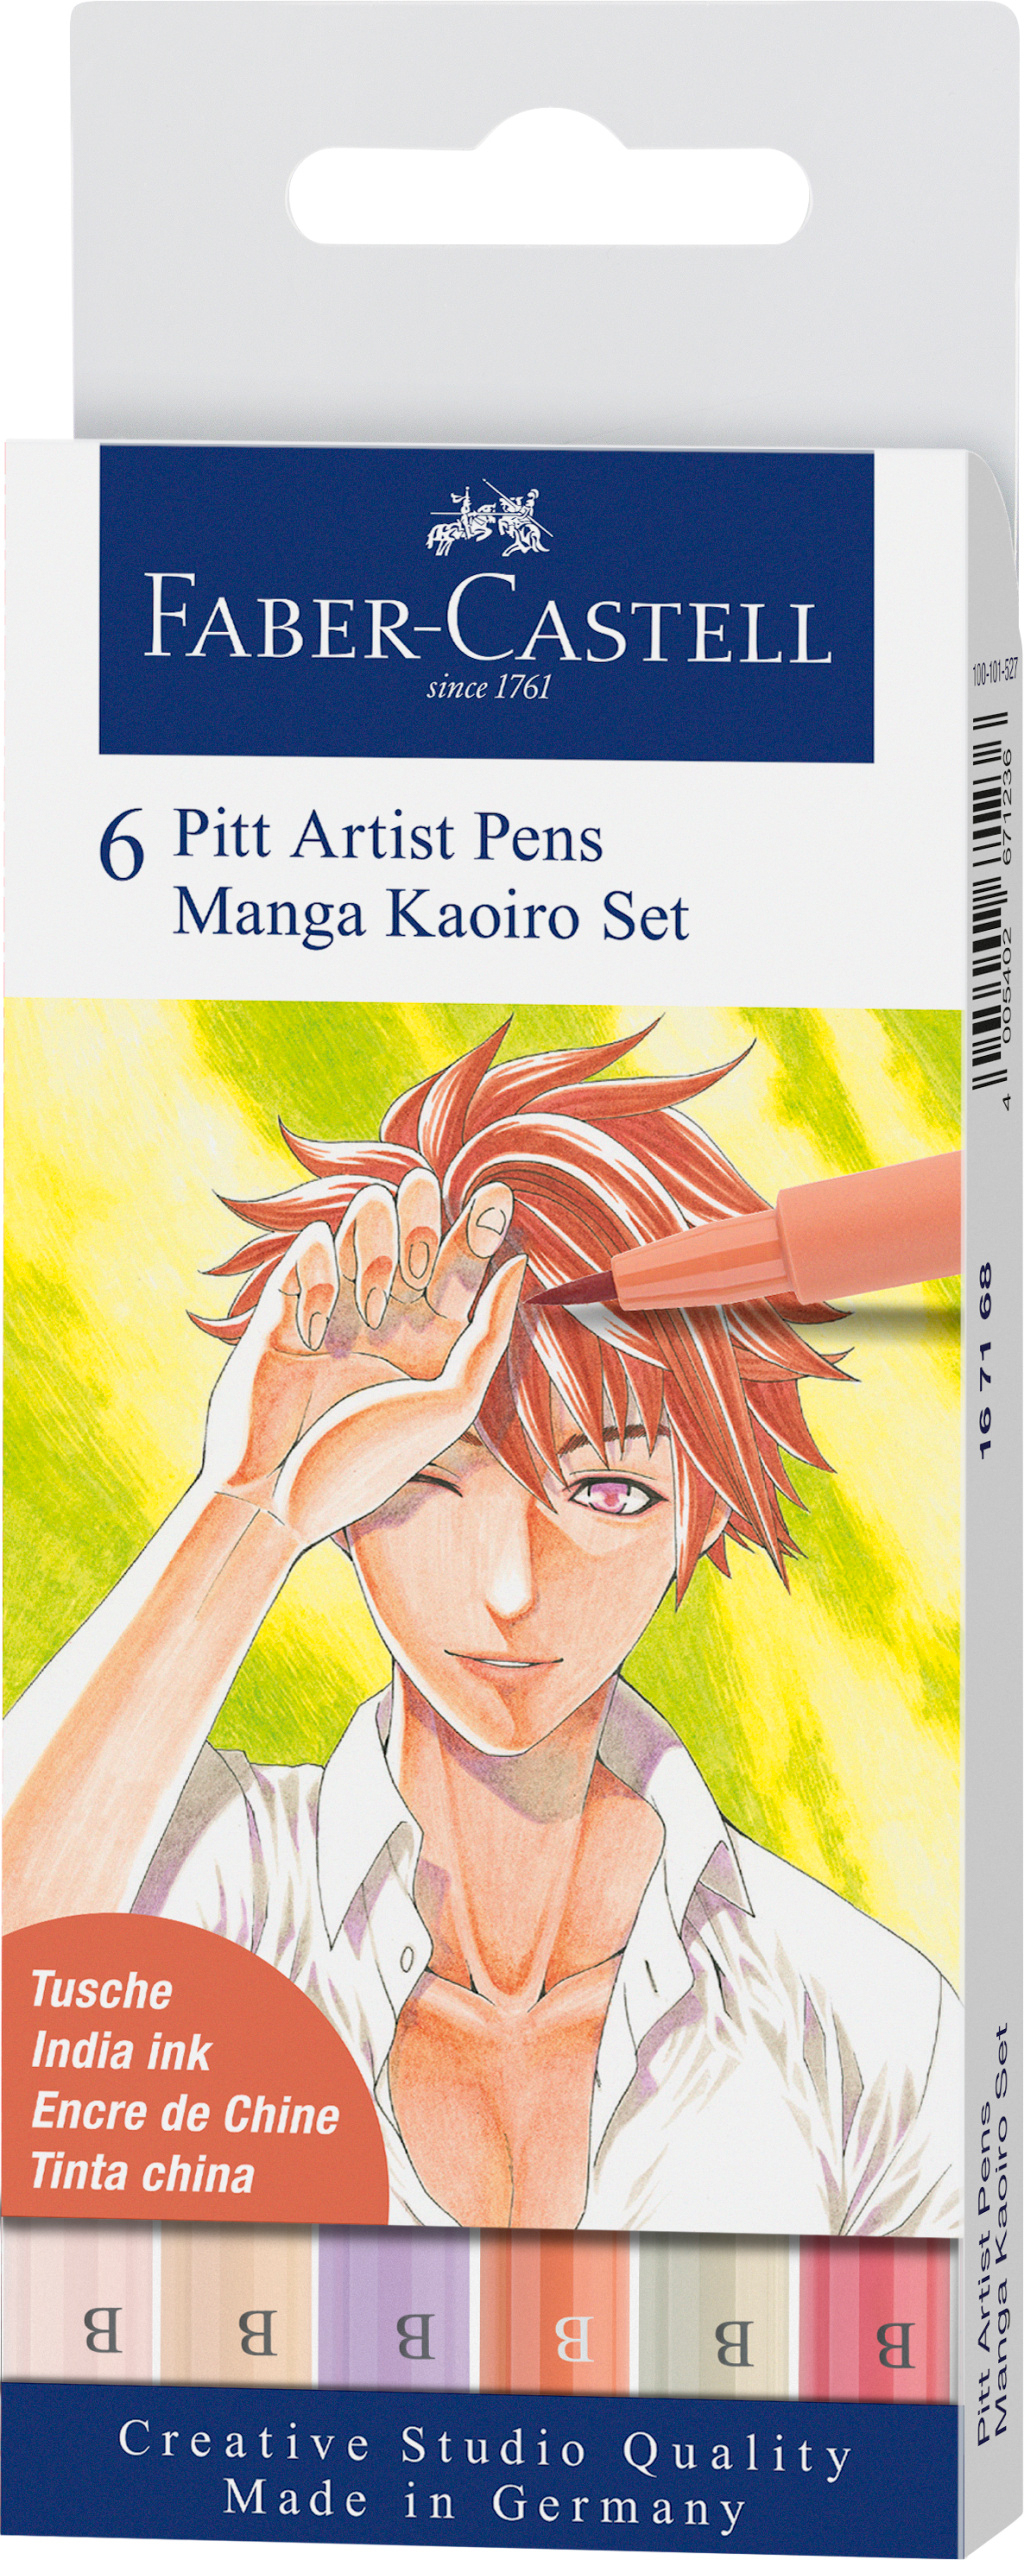 FABER-CASTELL Pitt Artist Pen Manga Kaoiro 167168 couleurs 6 pcs. couleurs 6 pcs.